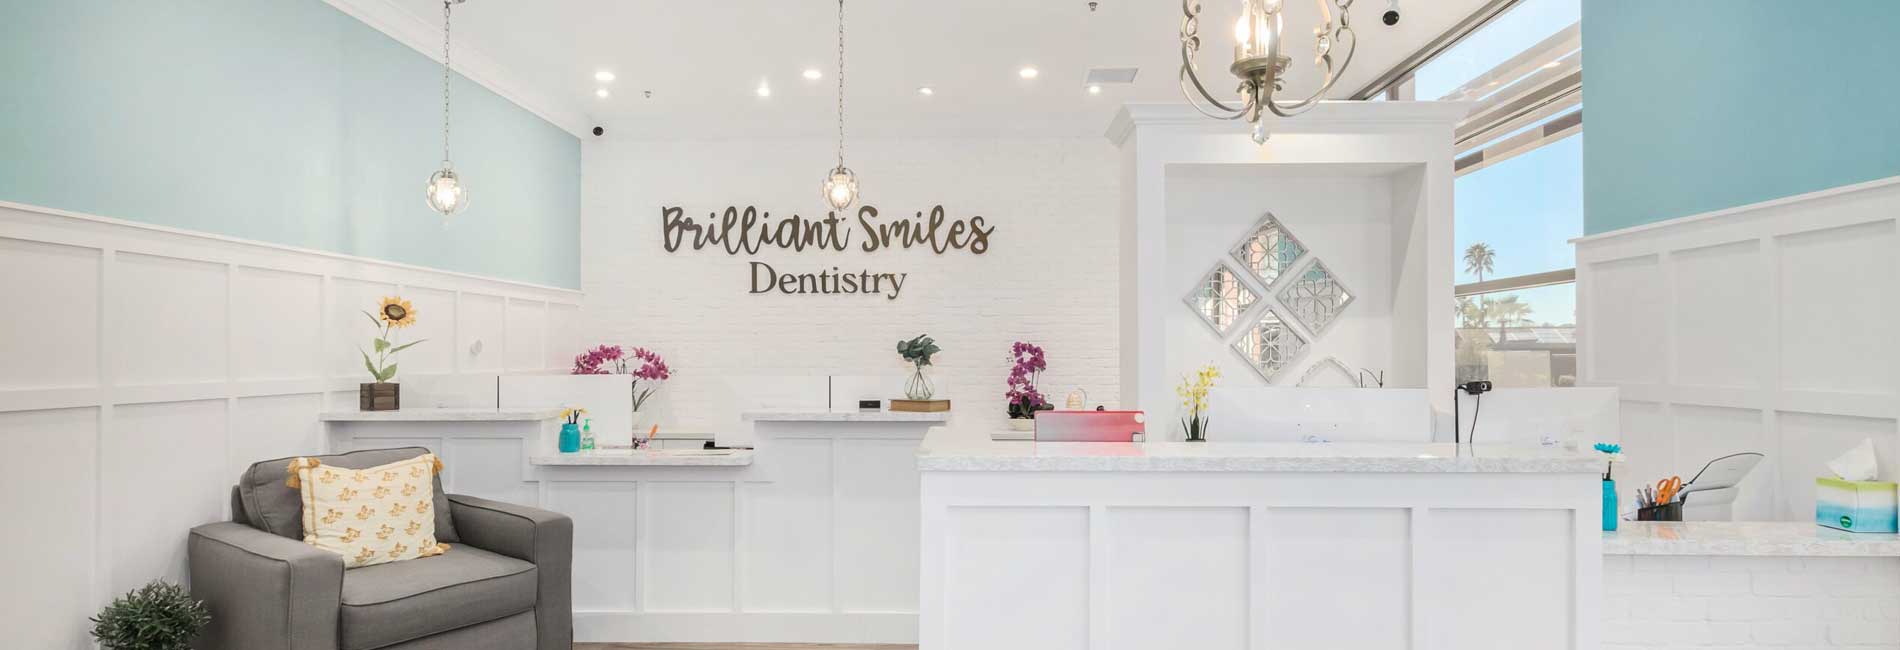 Reception of Brilliant Smiles Dentistry